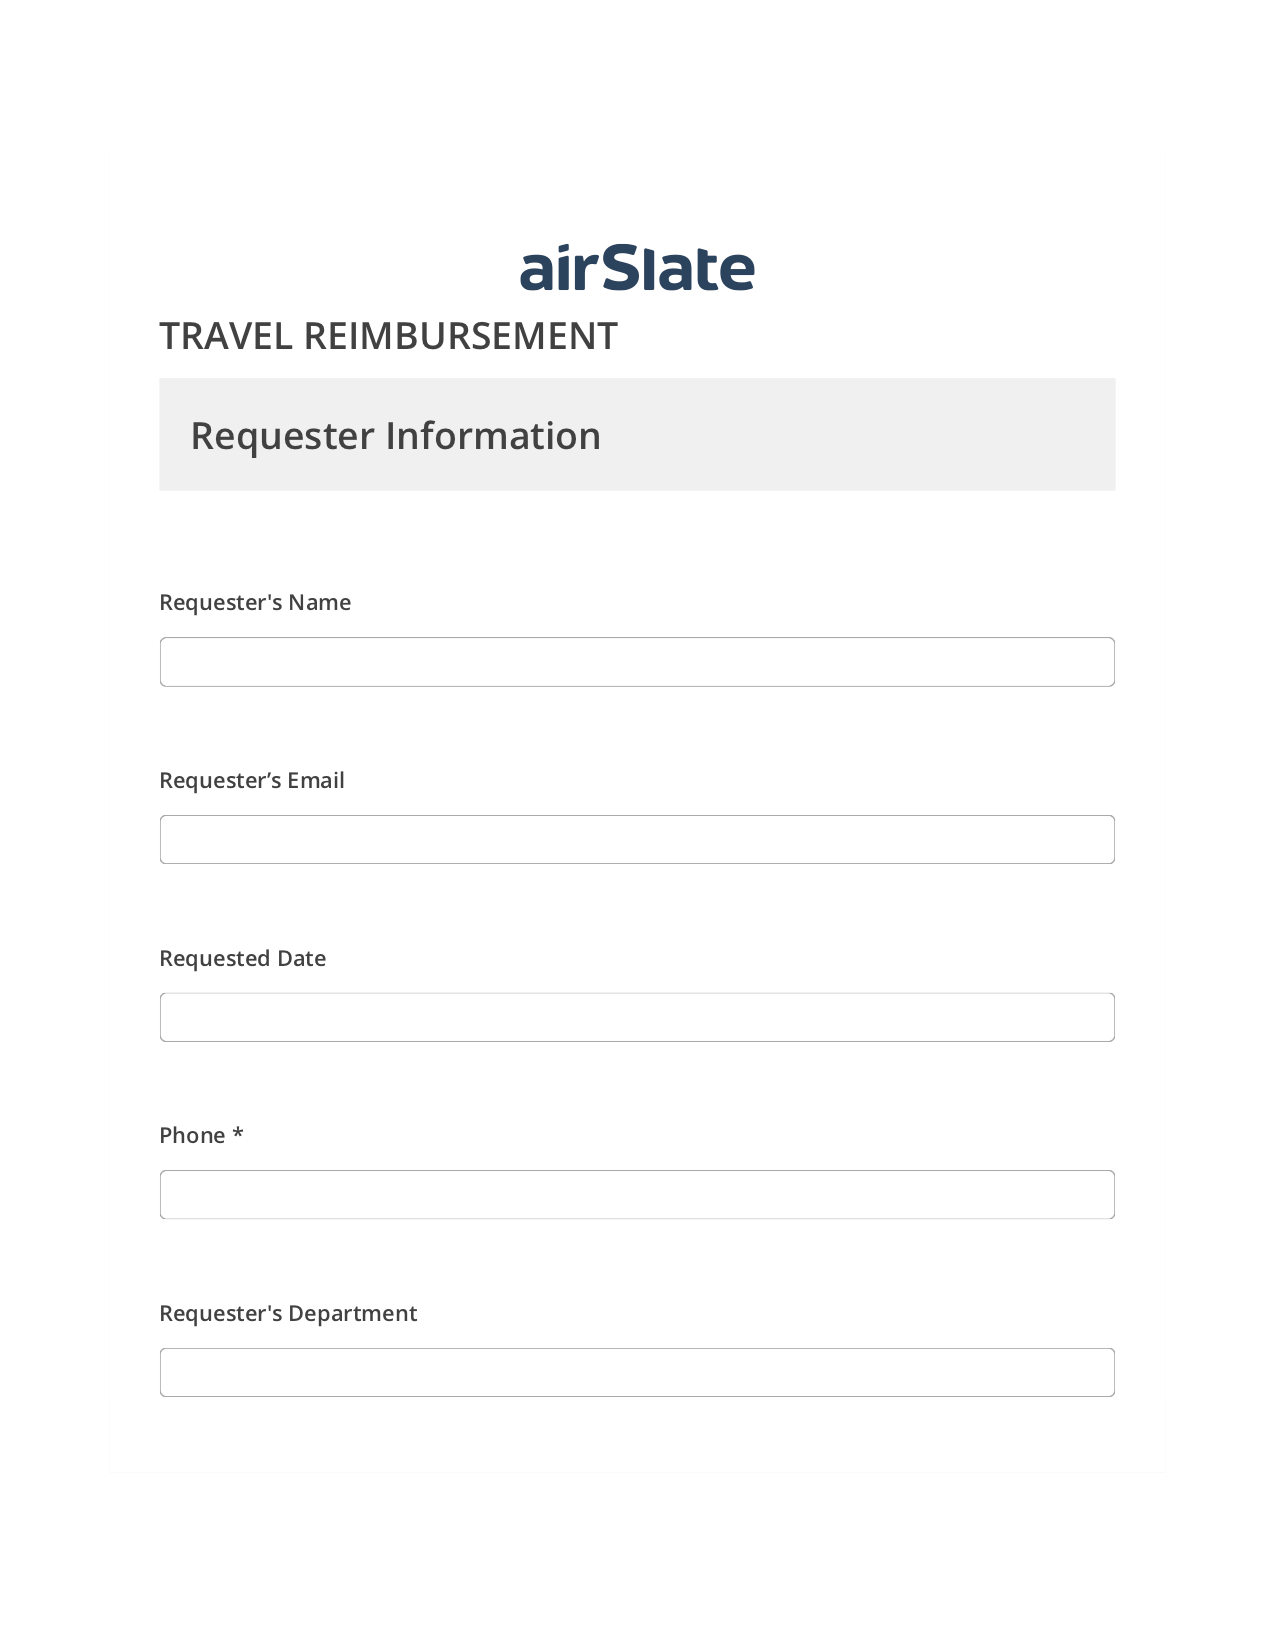 Multirole Travel Reimbursement Workflow Pre-fill from another Slate Bot, Update NetSuite Records Bot, Export to Google Sheet Bot